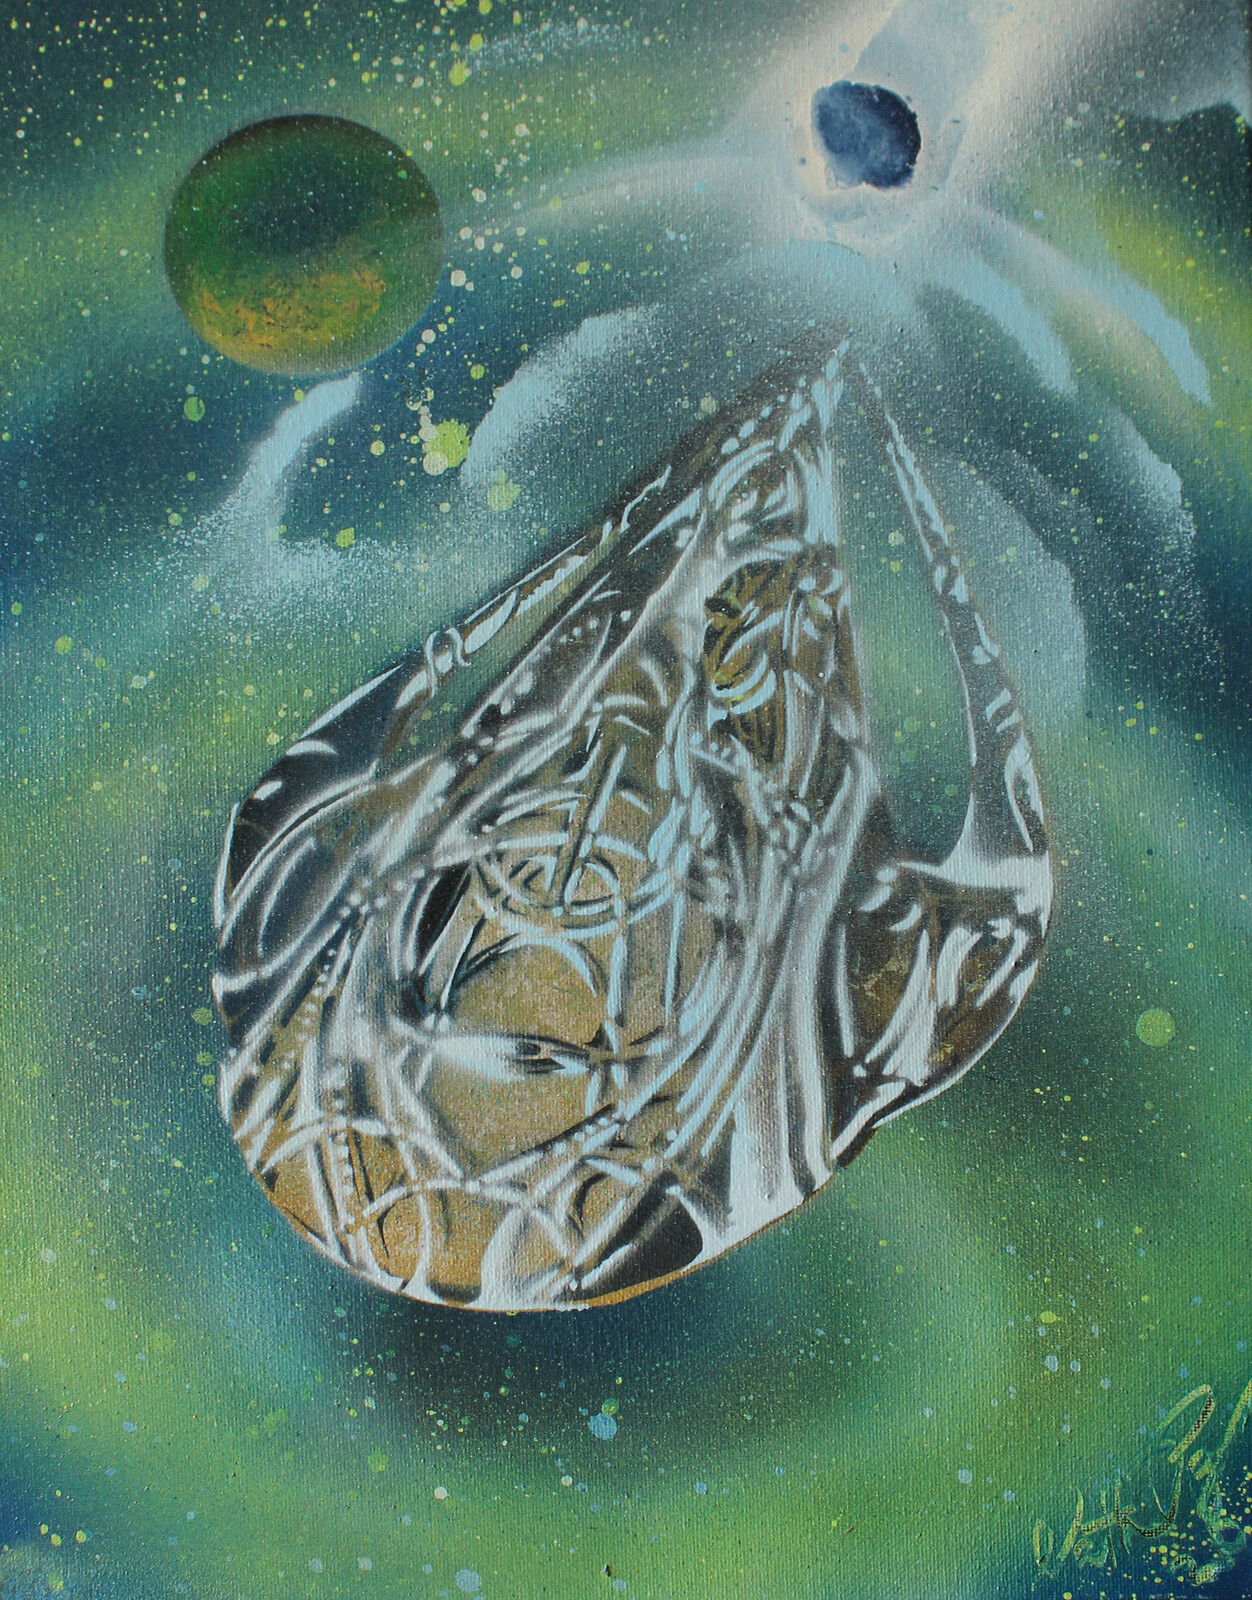 'Starburst MOYA' of Farscape. Spray paint on canvas 12x16(unedited photo)